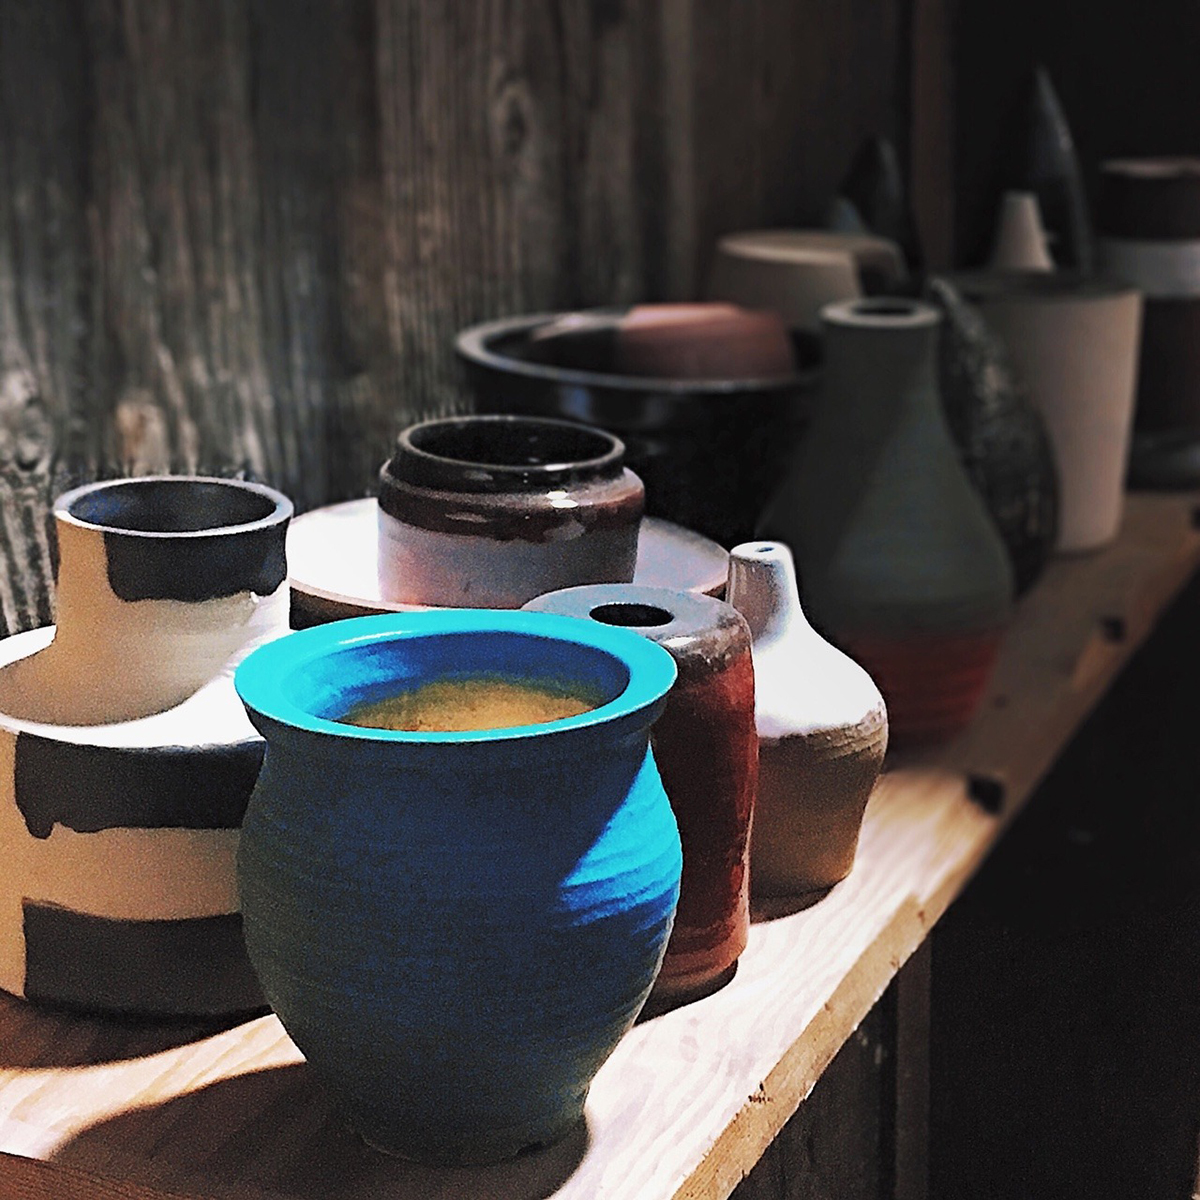 ceramic pots by Eliot Park, MFA in Applied Craft+Design 